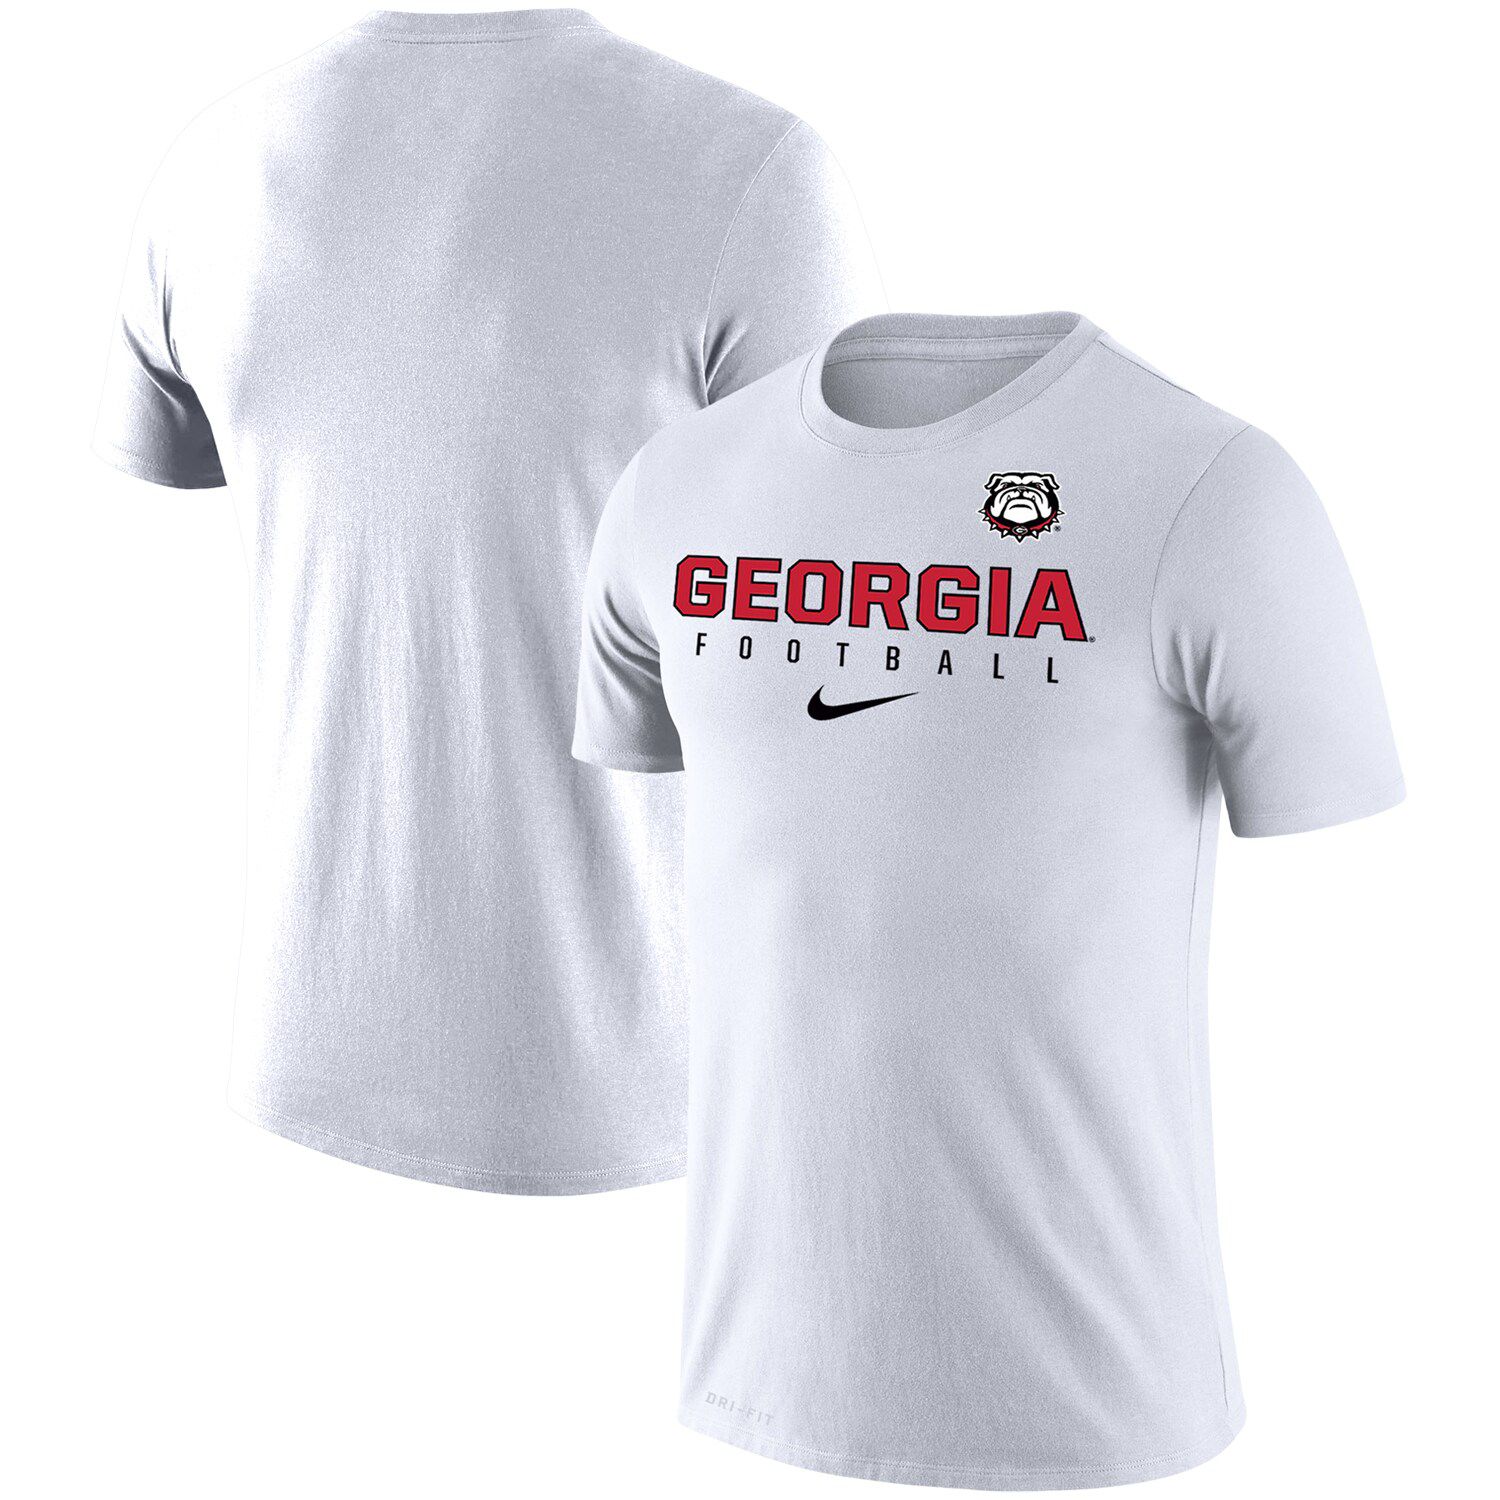 georgia football shirt